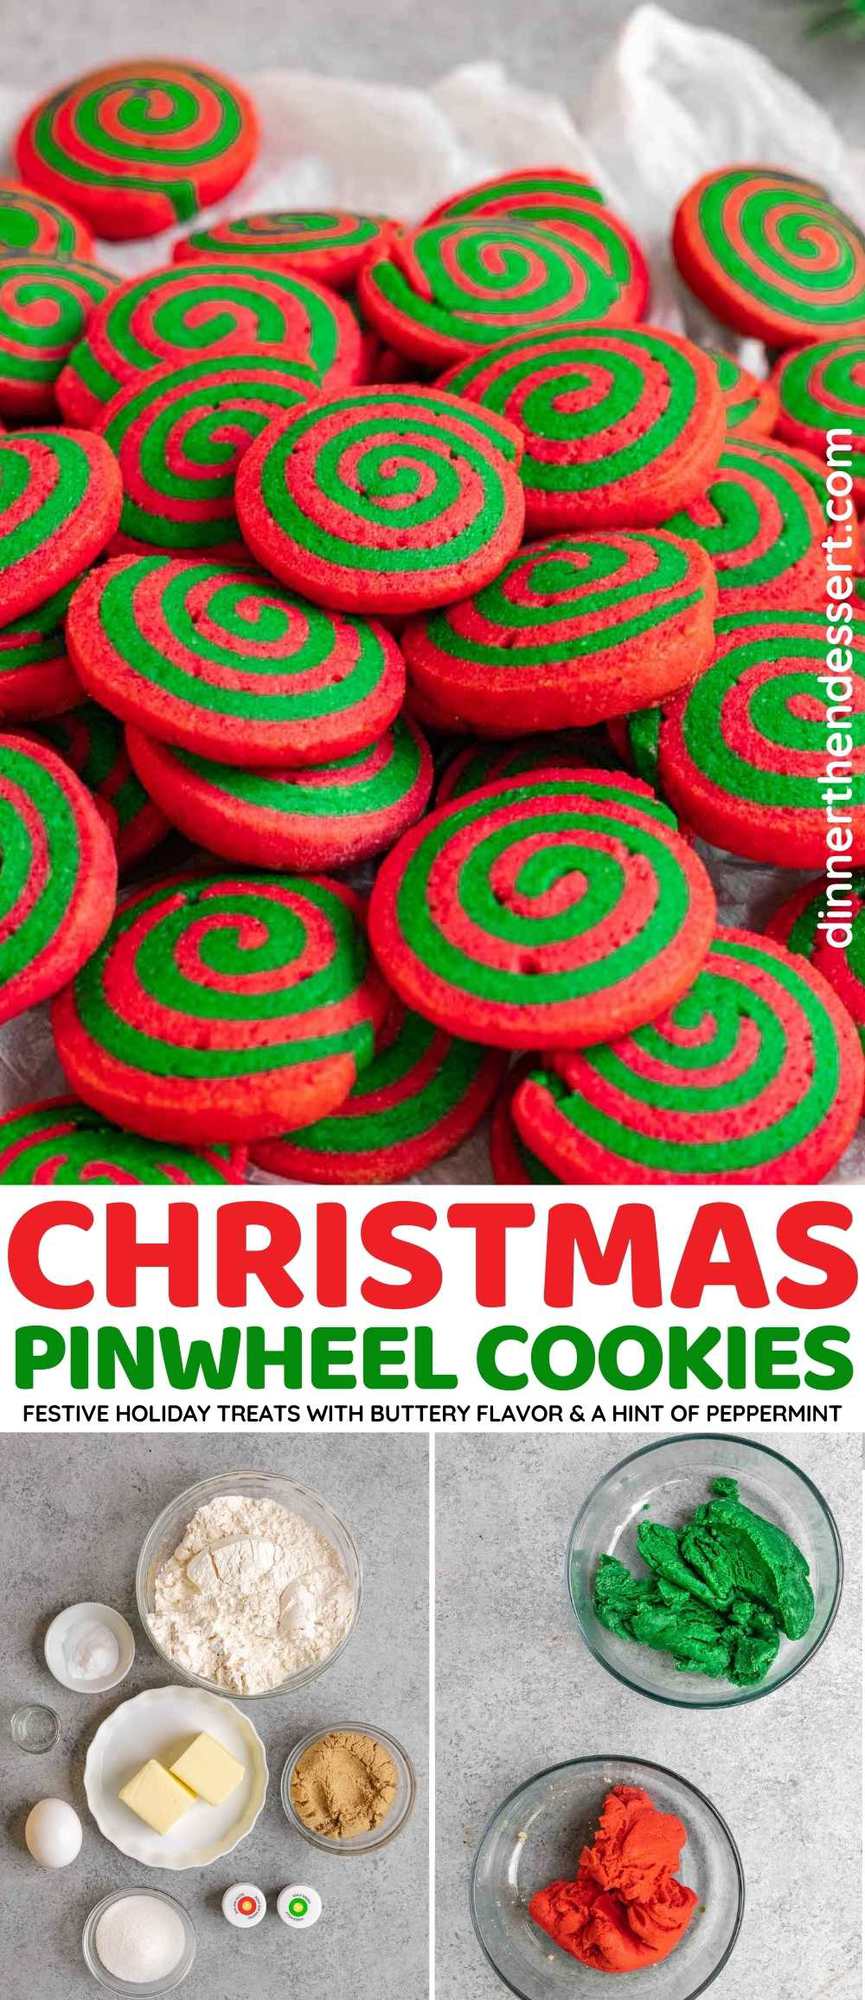 Christmas Pinwheel Cookies collage